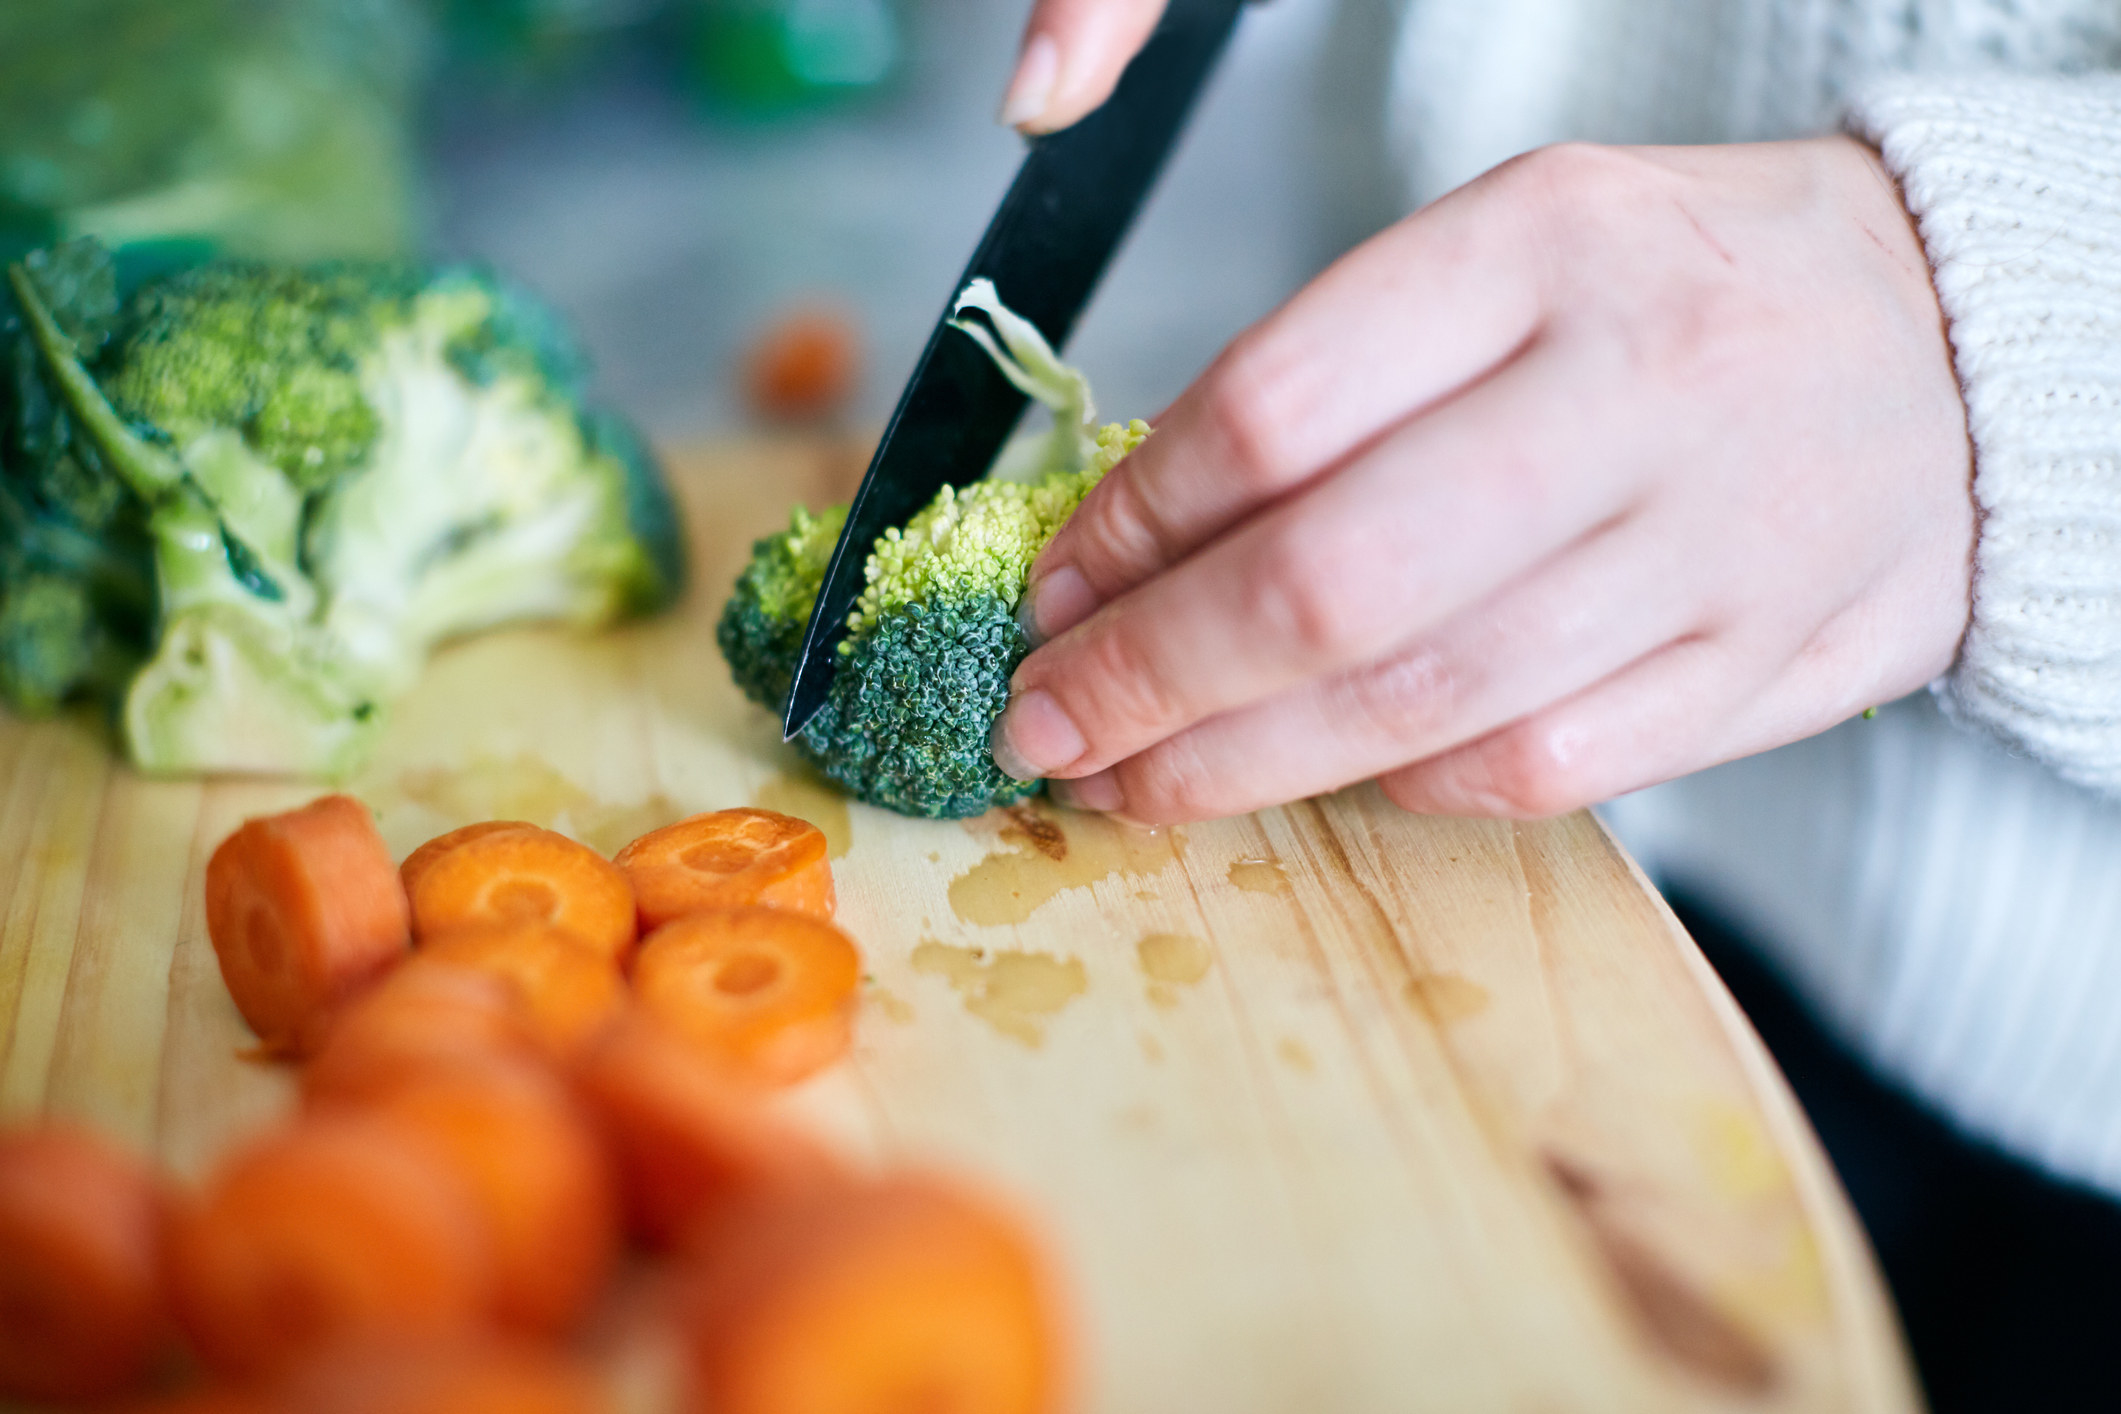 A woman slicing broccoli.